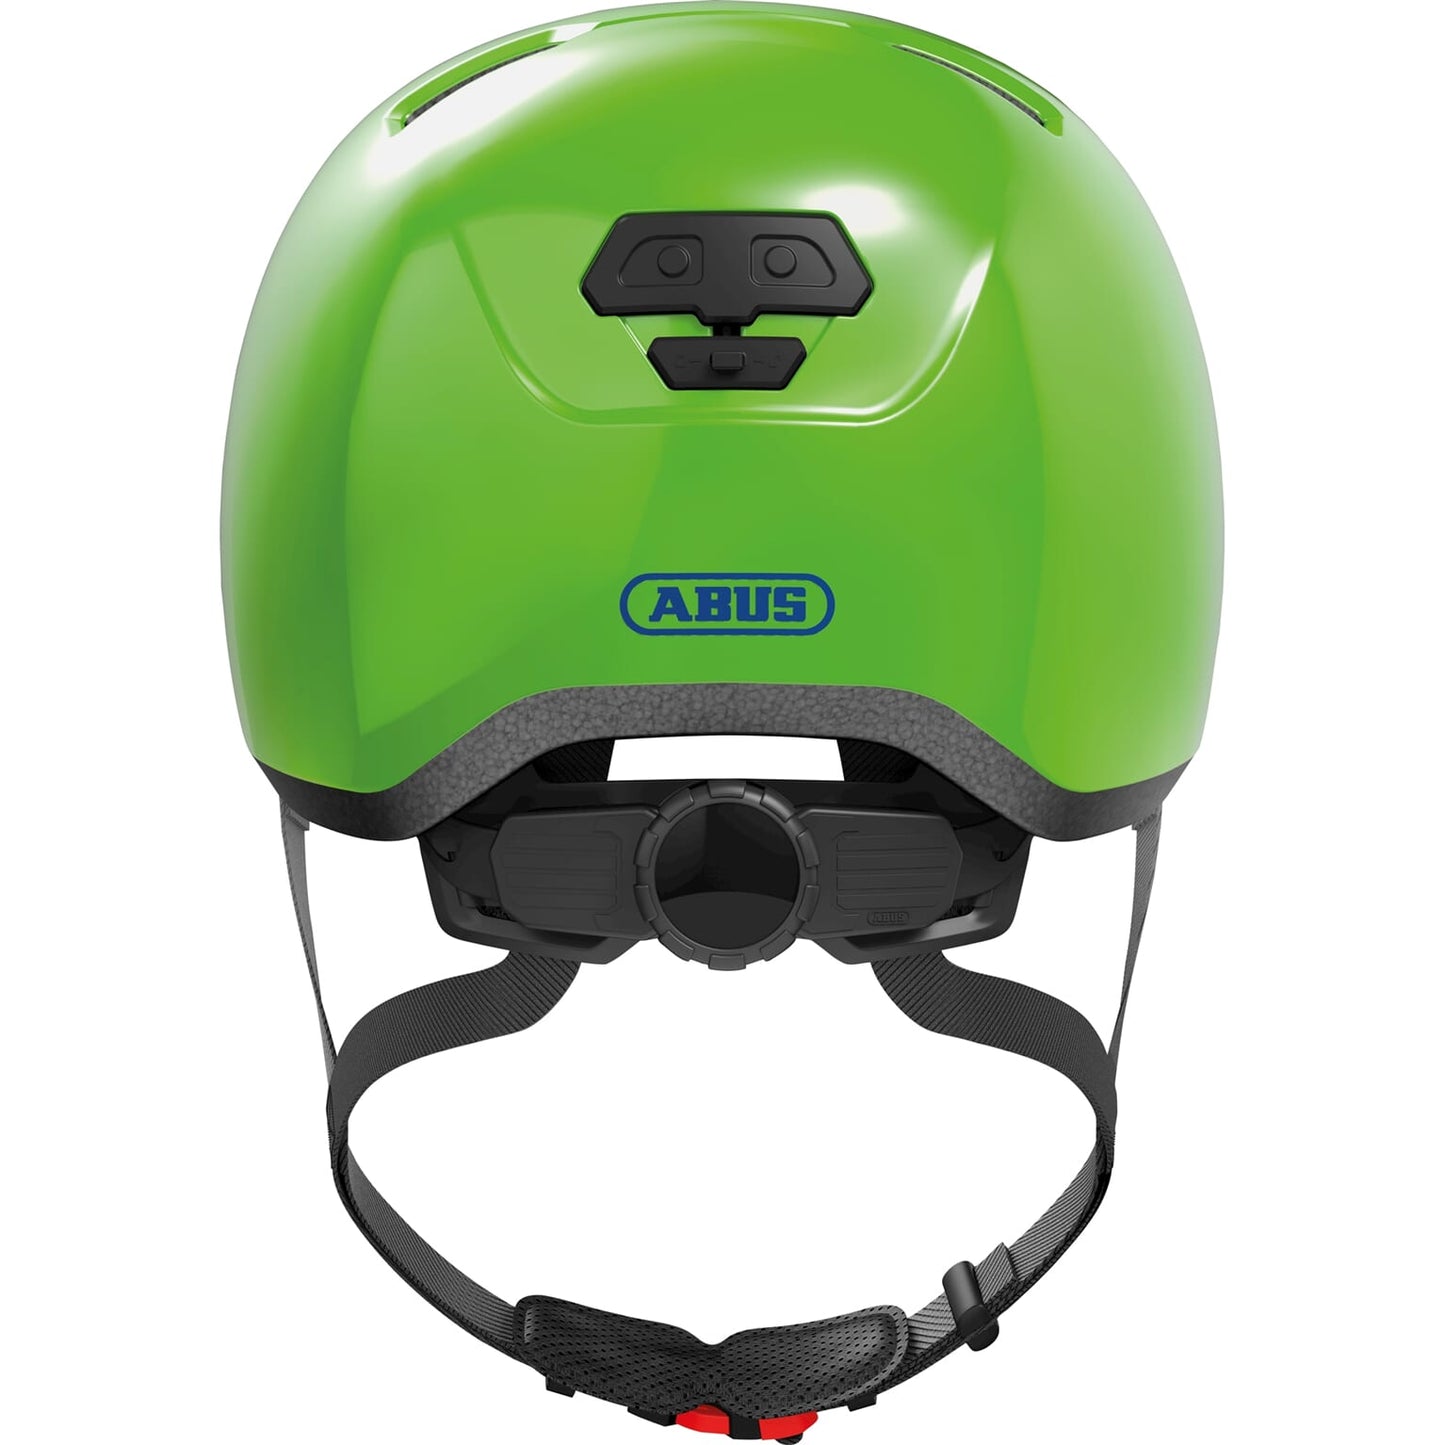 Helmet skurb kurb kid luccicio verde s 45-50 cm